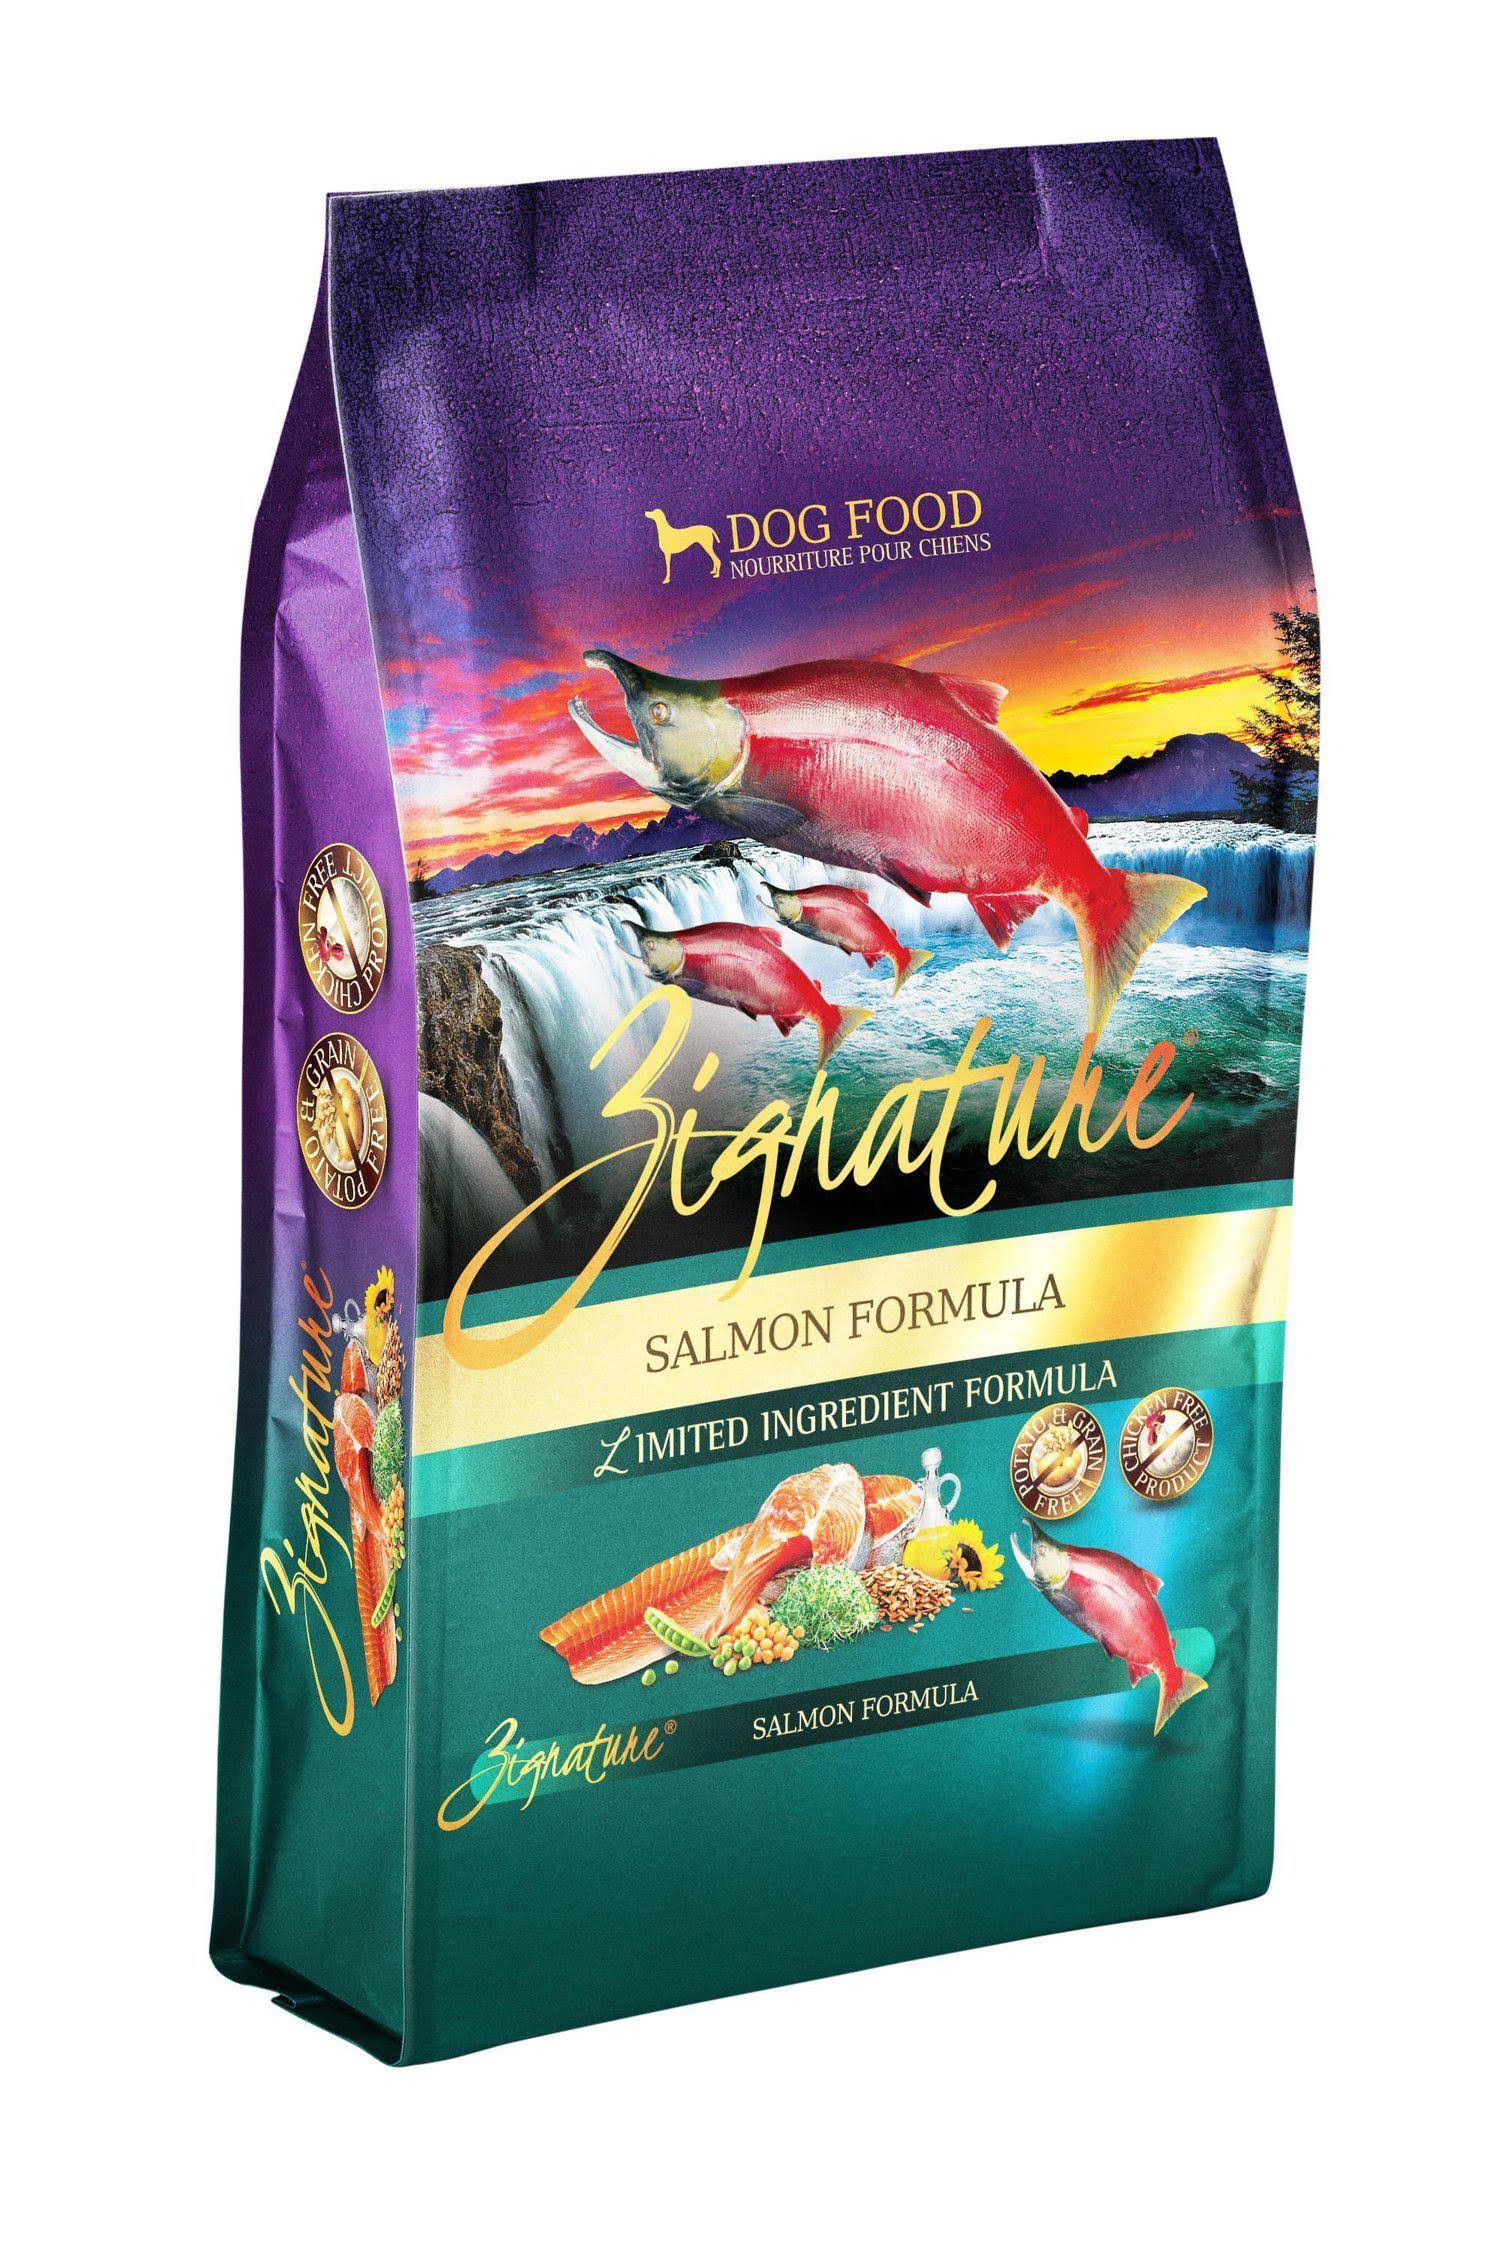 Zignature Limited Ingredient Salmon Formula Dry Dog Food - 4-Lbs.